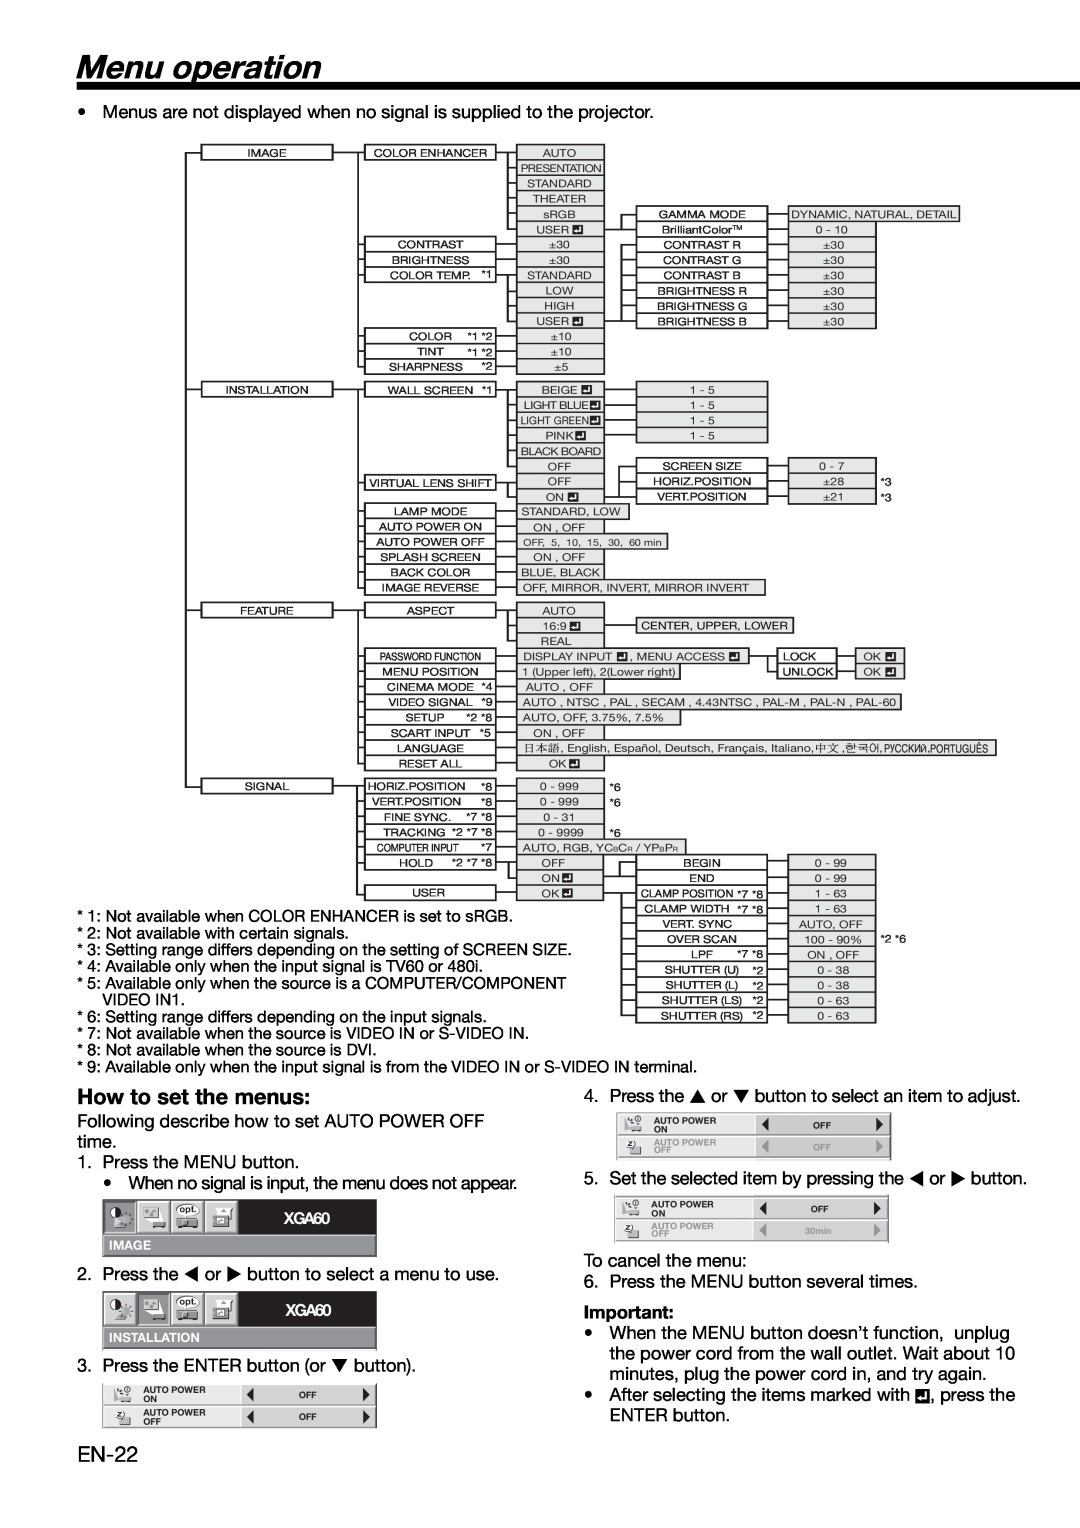 Mitsubishi Electronics XD490U user manual Menu operation, How to set the menus 